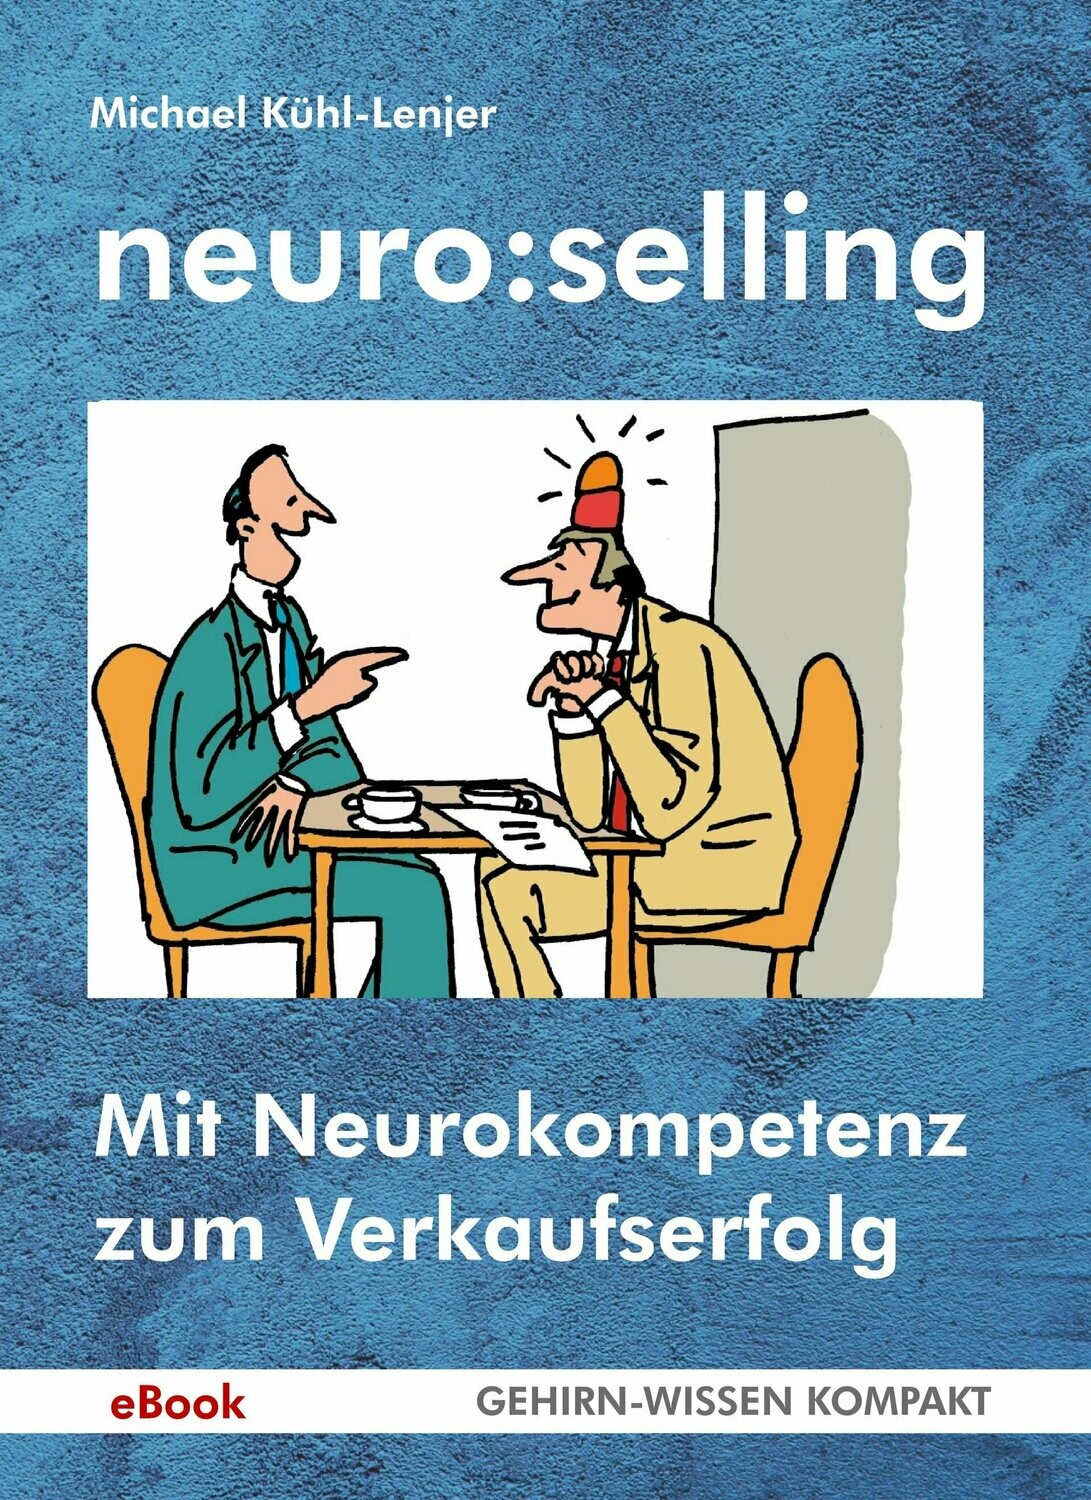 neuro:selling (eBook)